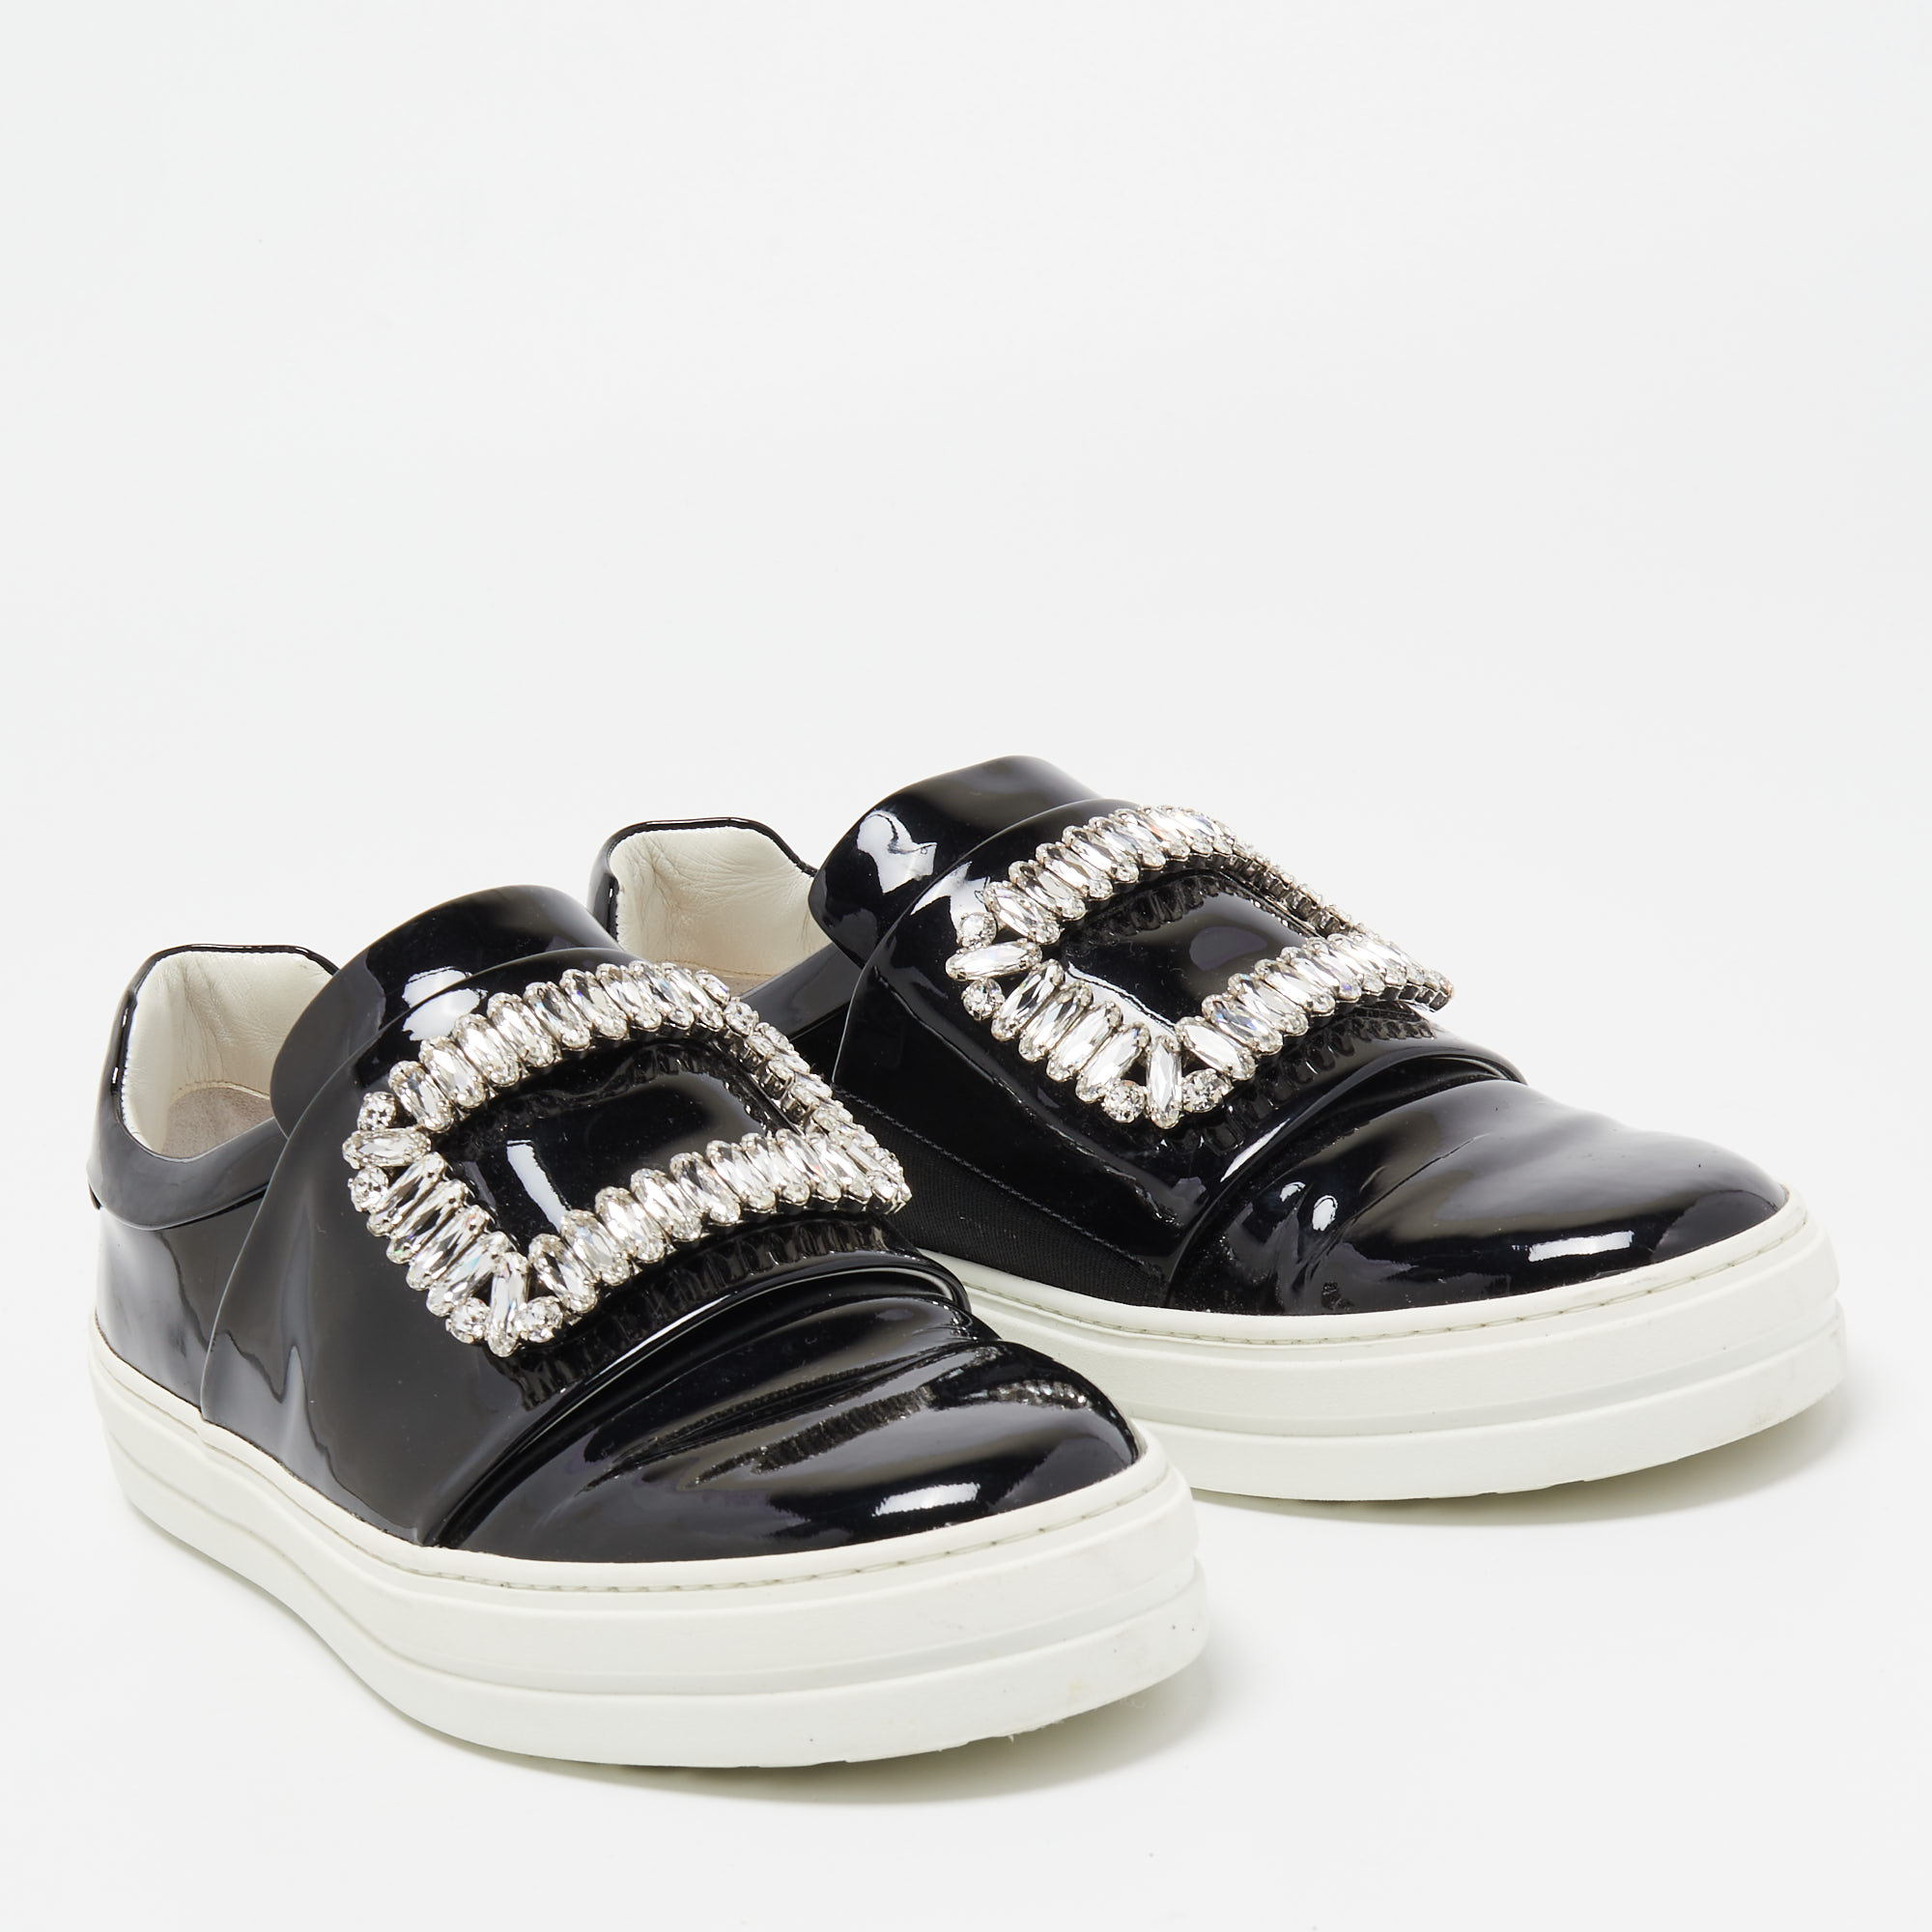 Roger Vivier Black Patent Leather Sneaky Viv Crystal Embellished Slip On Sneakers Size 38